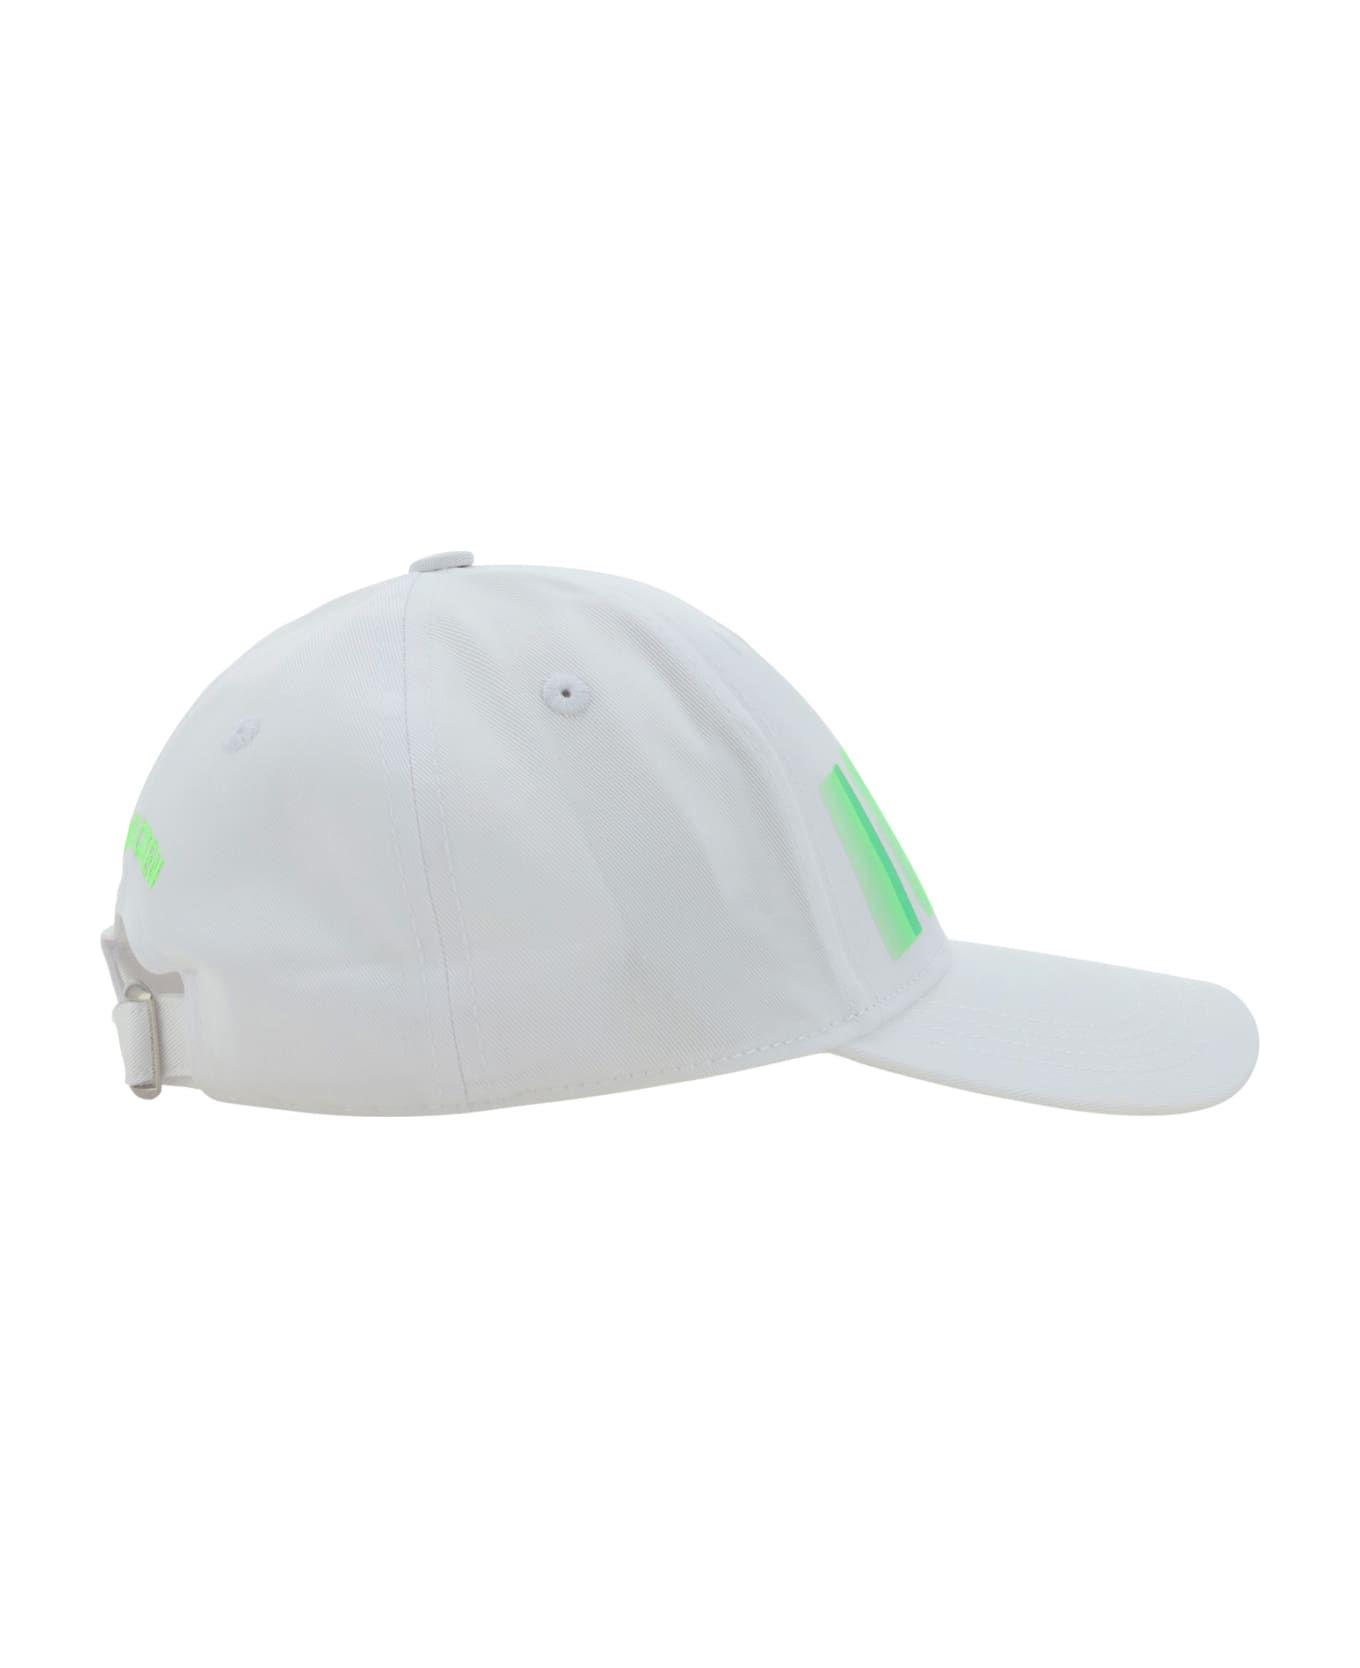 Dsquared2 Logo Baseball Cap - White 帽子